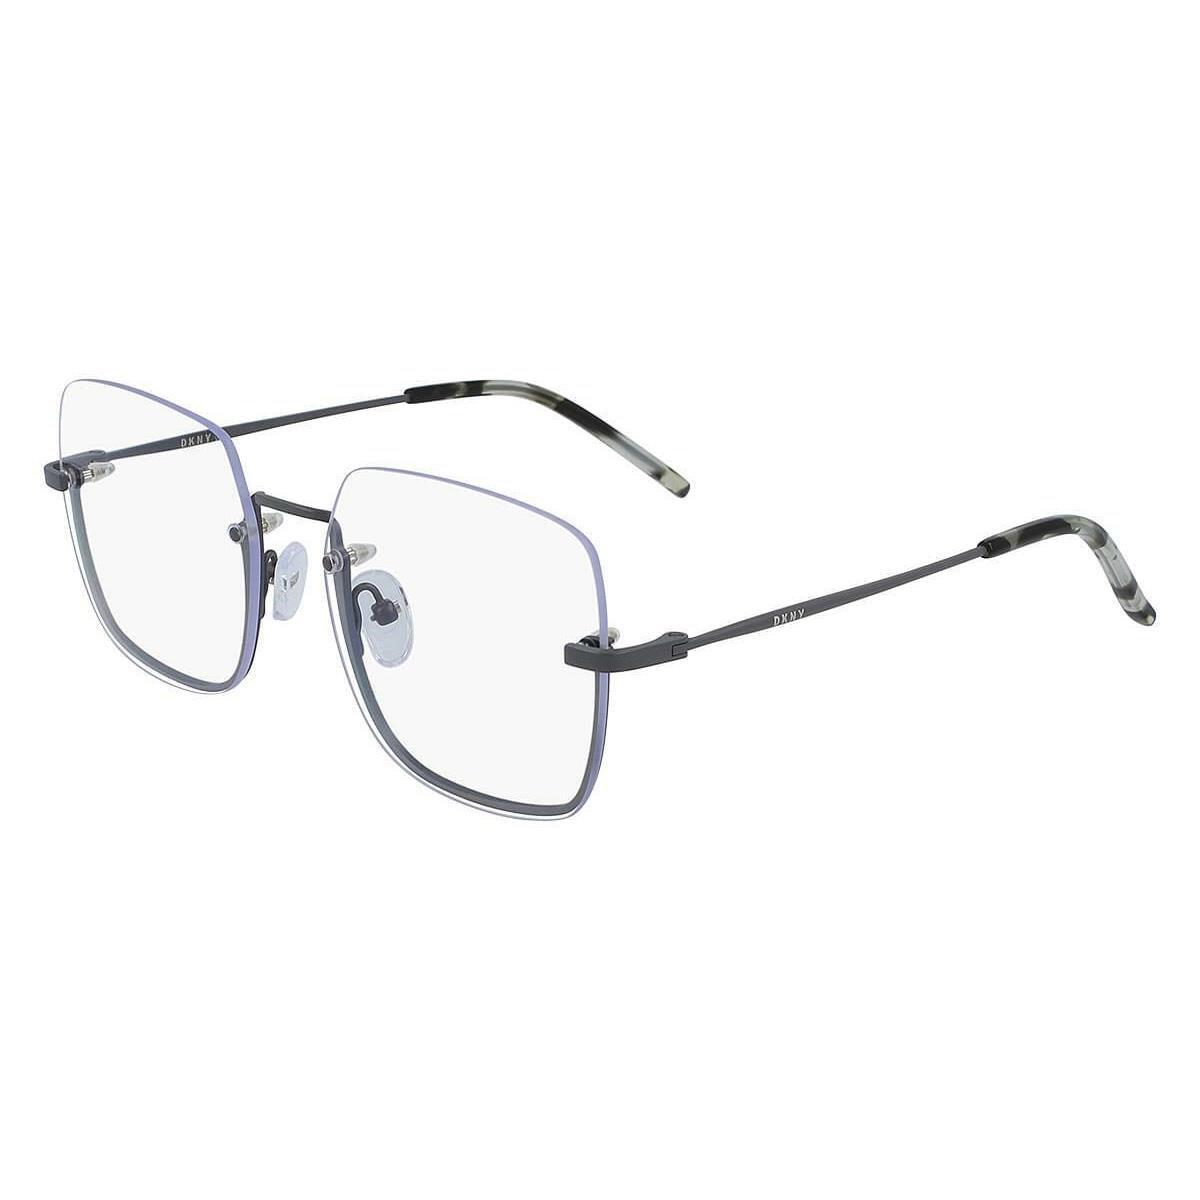 Dkny DK1001 014 Grey Eyeglasses 54mm with Dkny Case